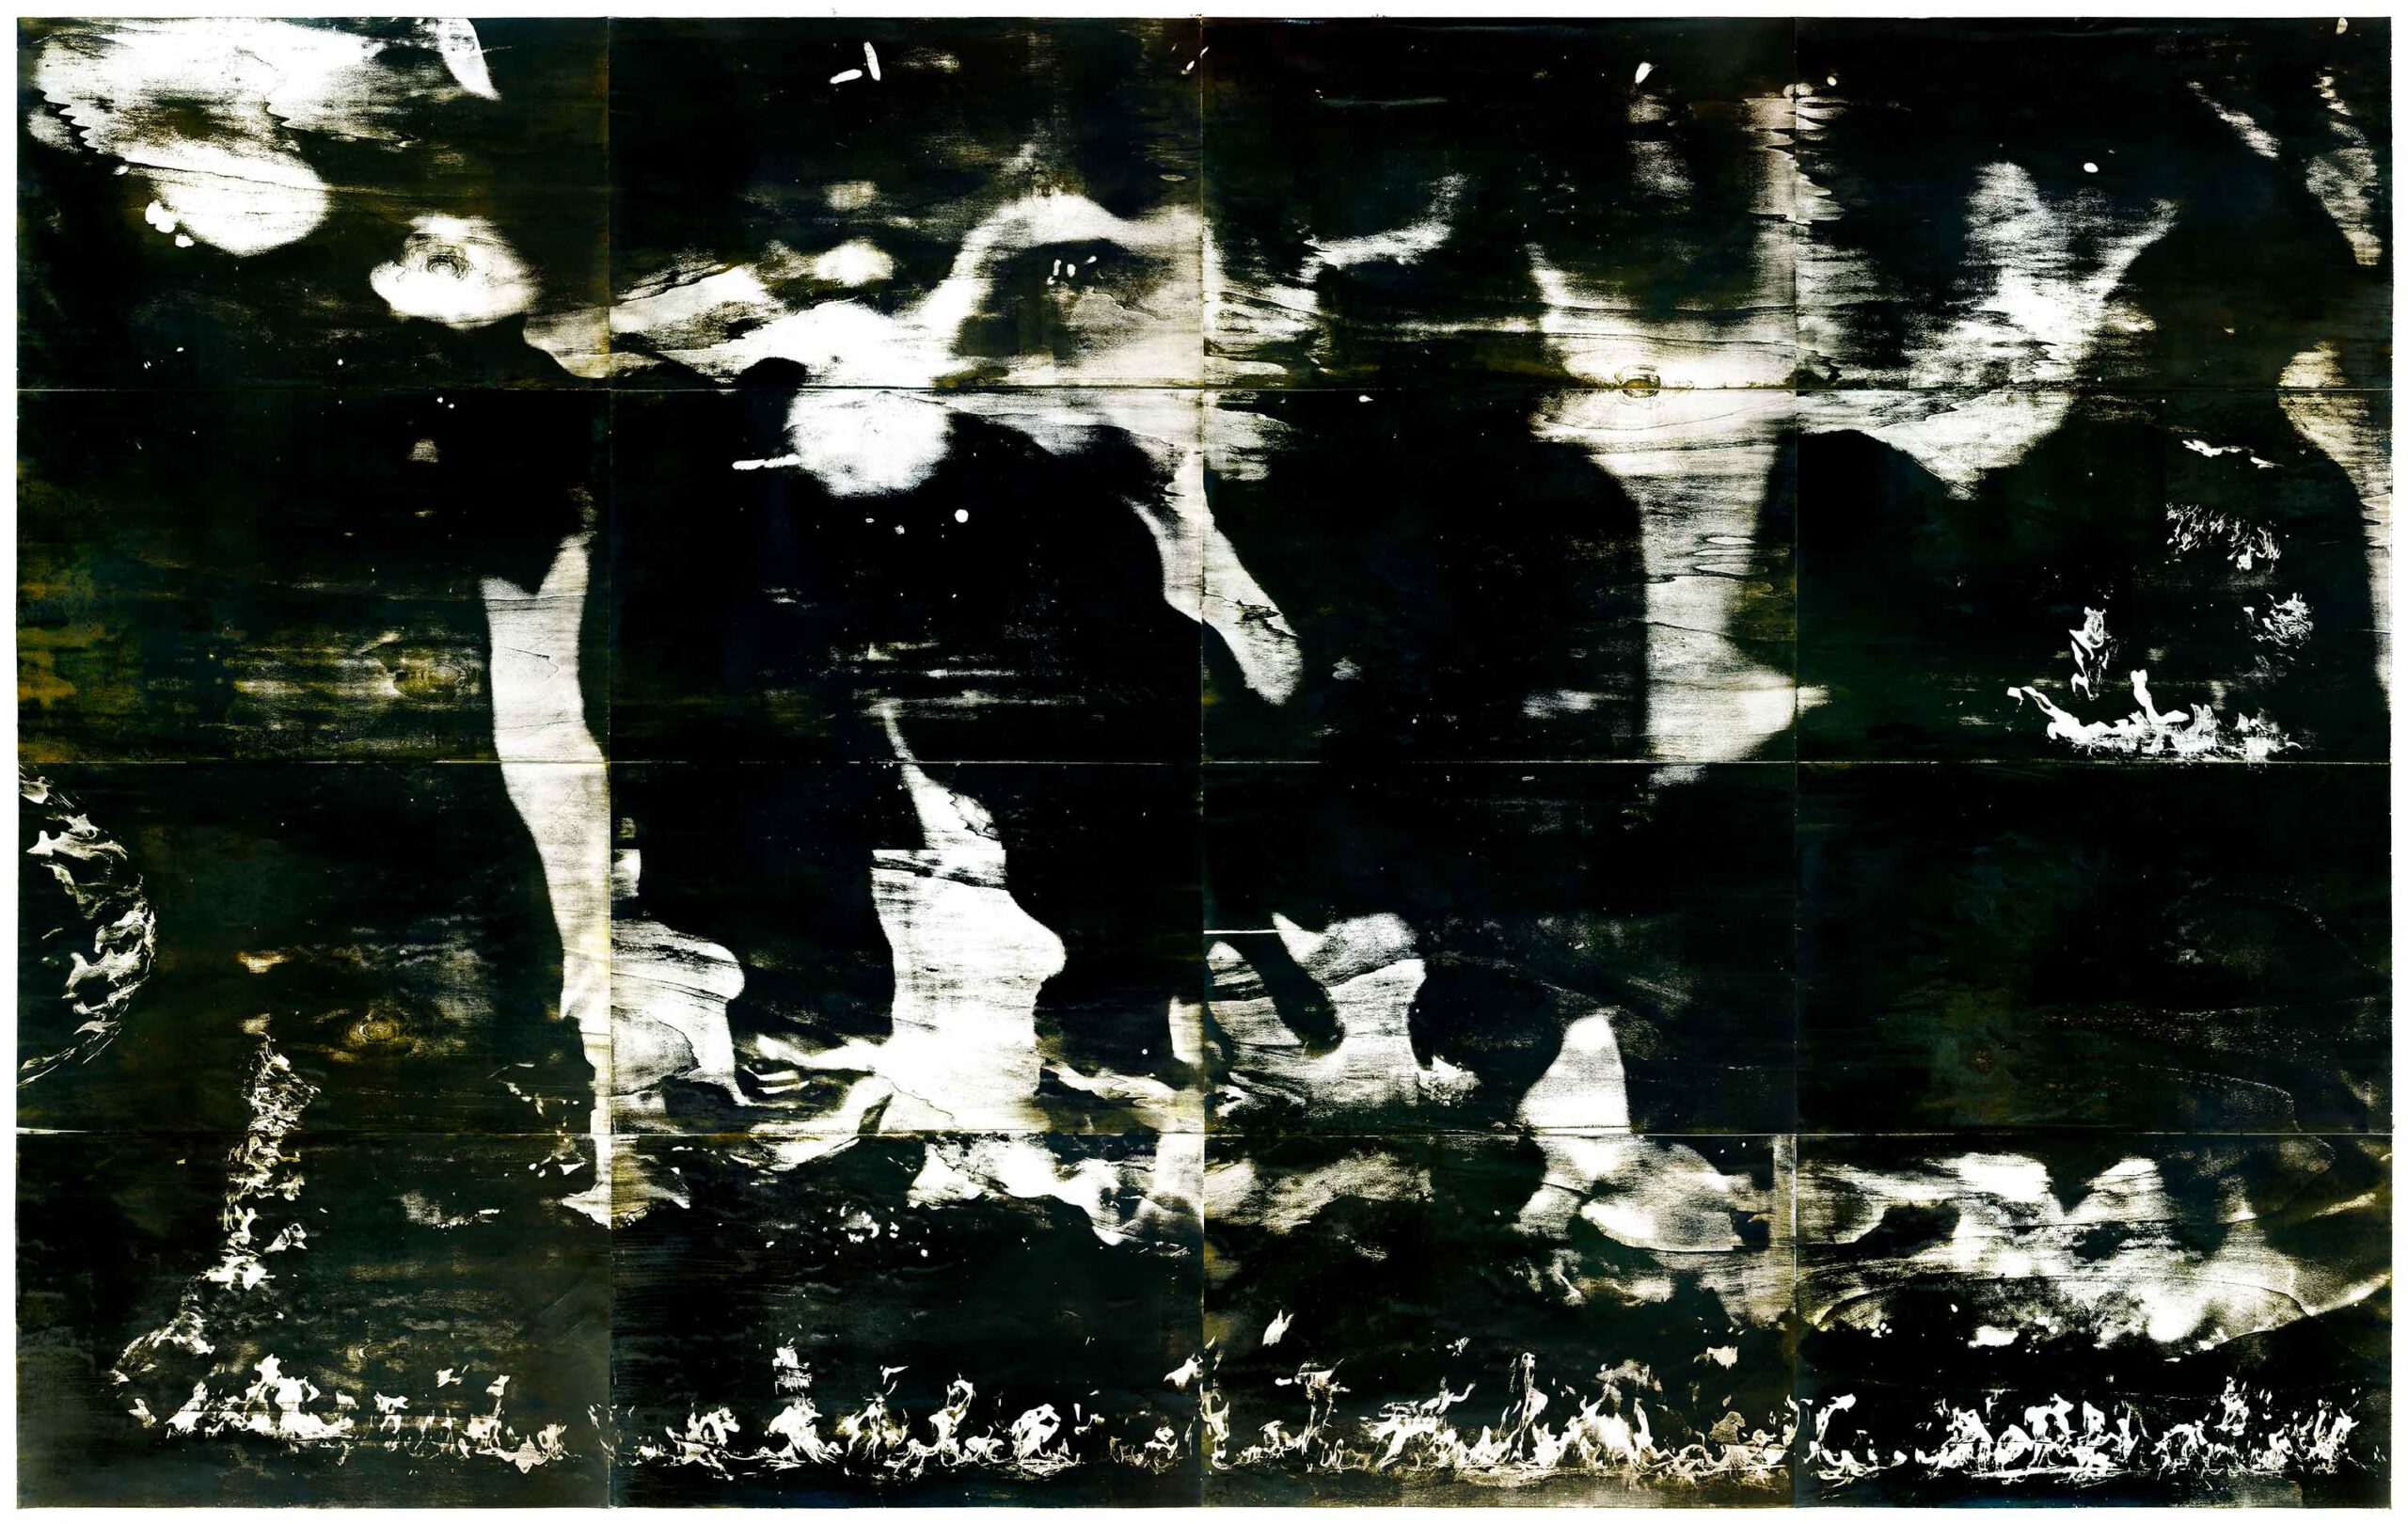 Flammen (g), 2020, wood engraving, 255 x 392 cm